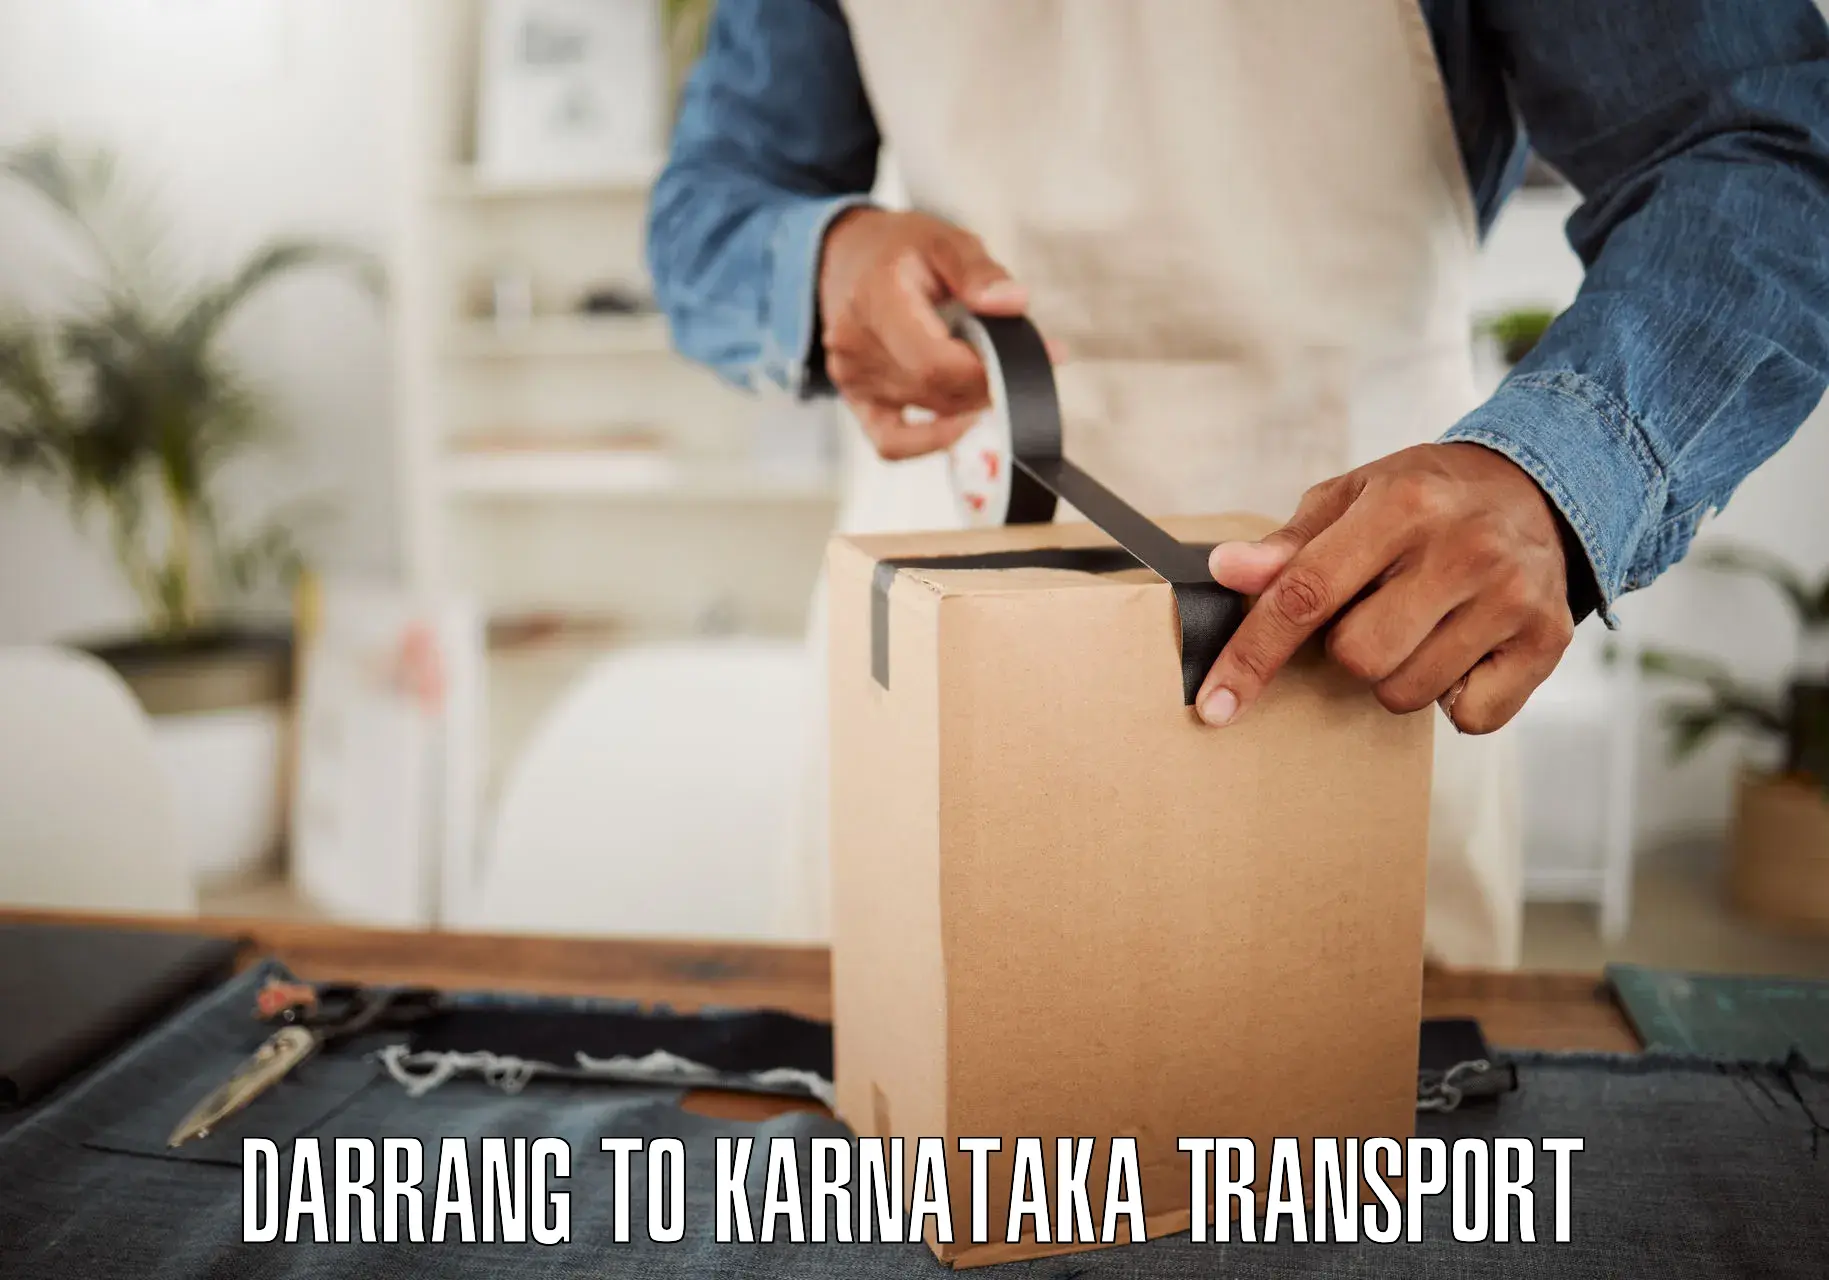 Transport in sharing Darrang to Talikoti